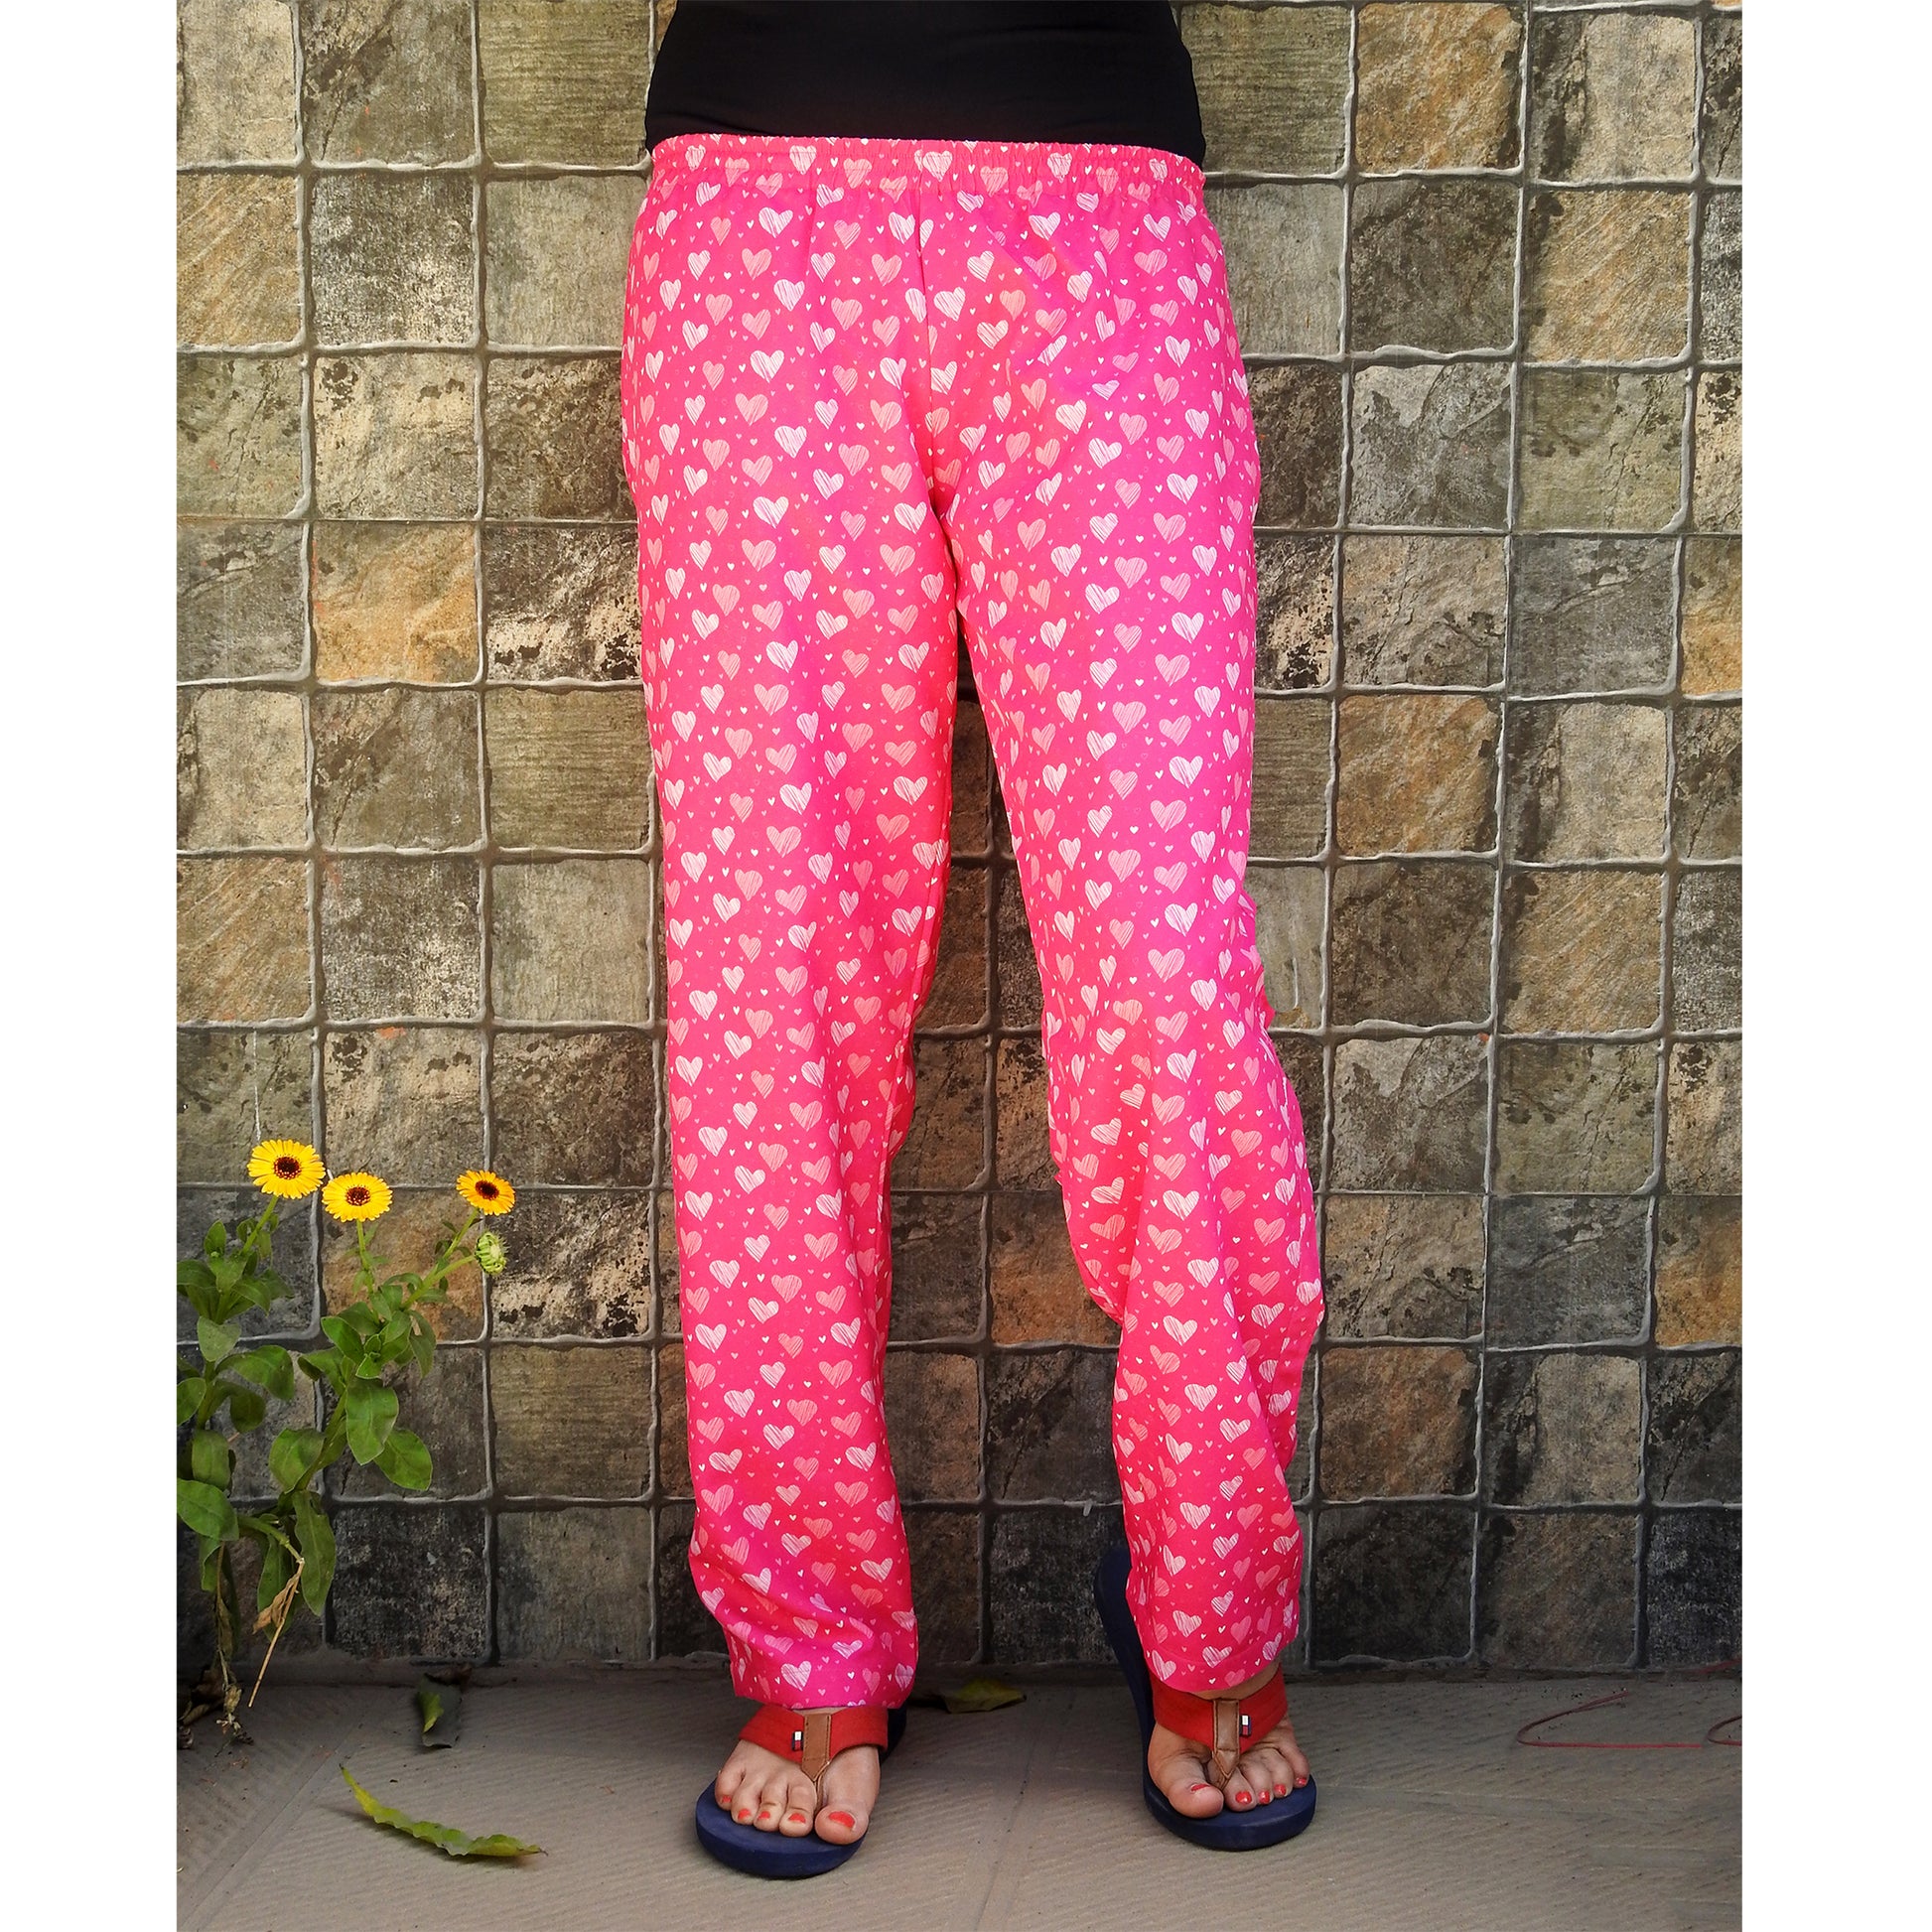 pink hearts print women's pajamas with pockets